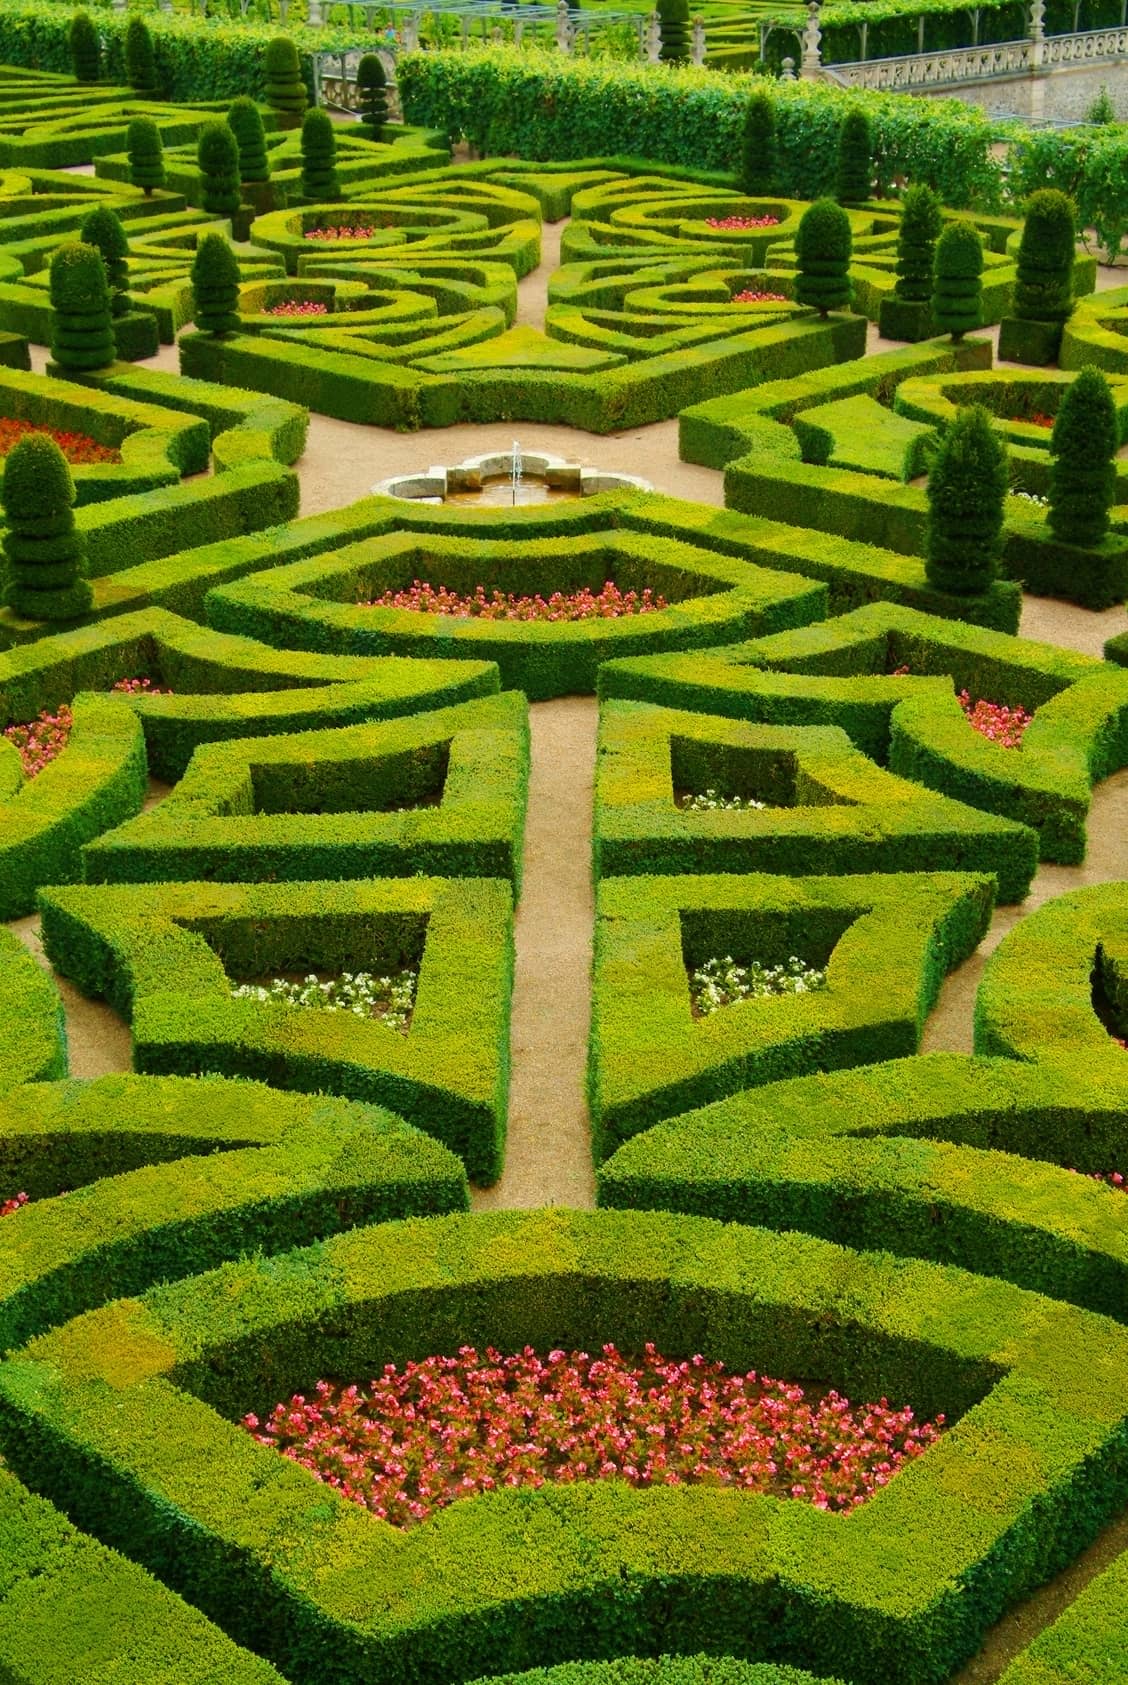 The gardens of the Château de Villandry